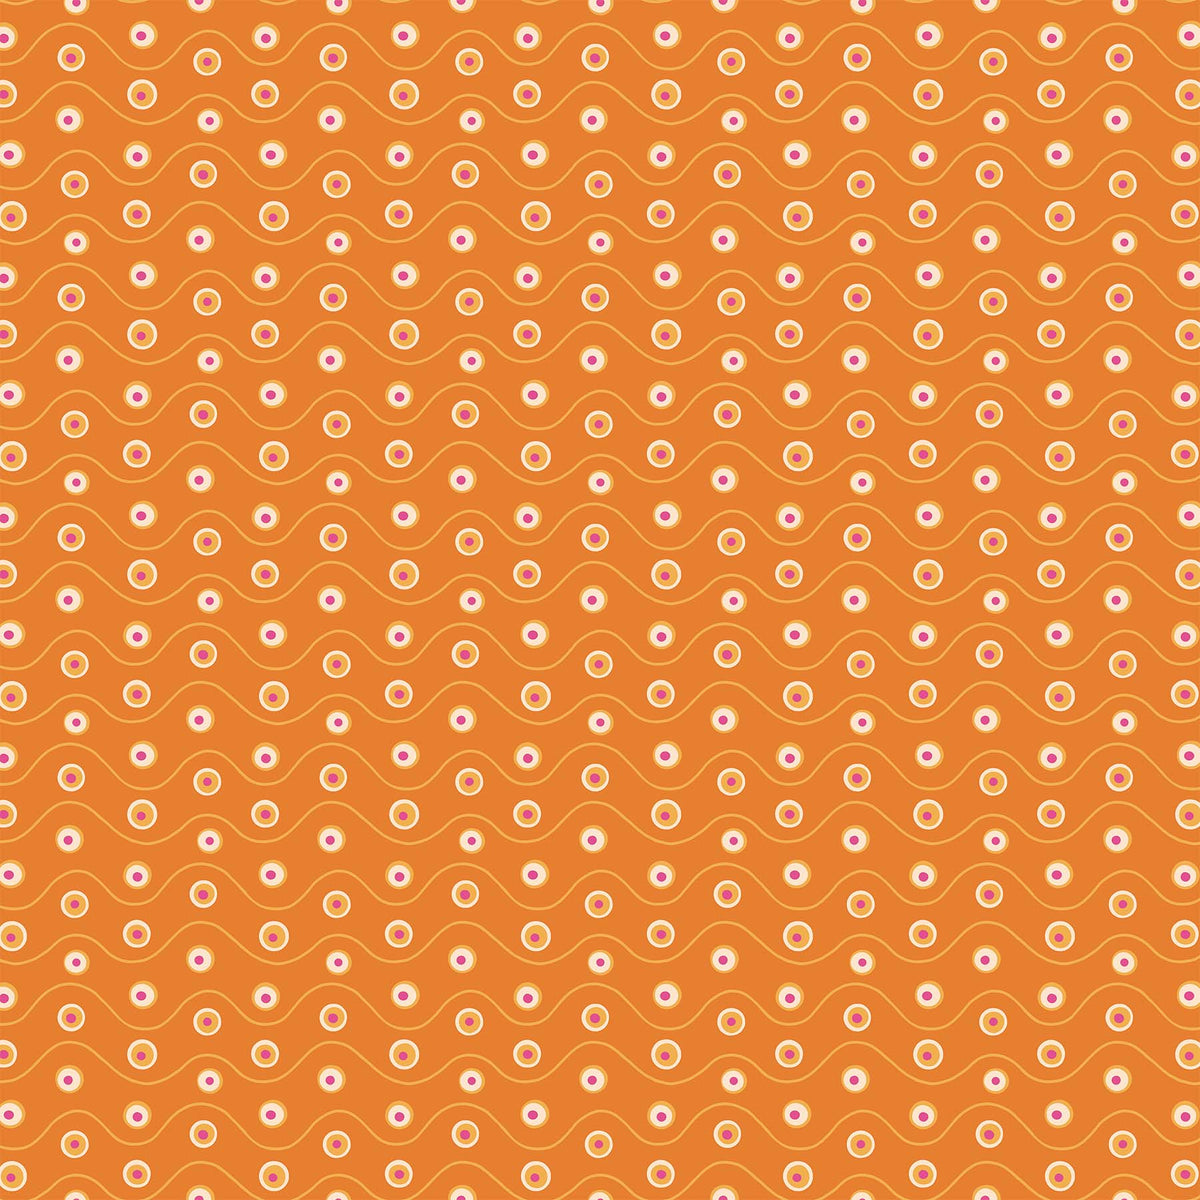 Happiness Quilt Fabric - Wave in Orange/Multi - 90596-56